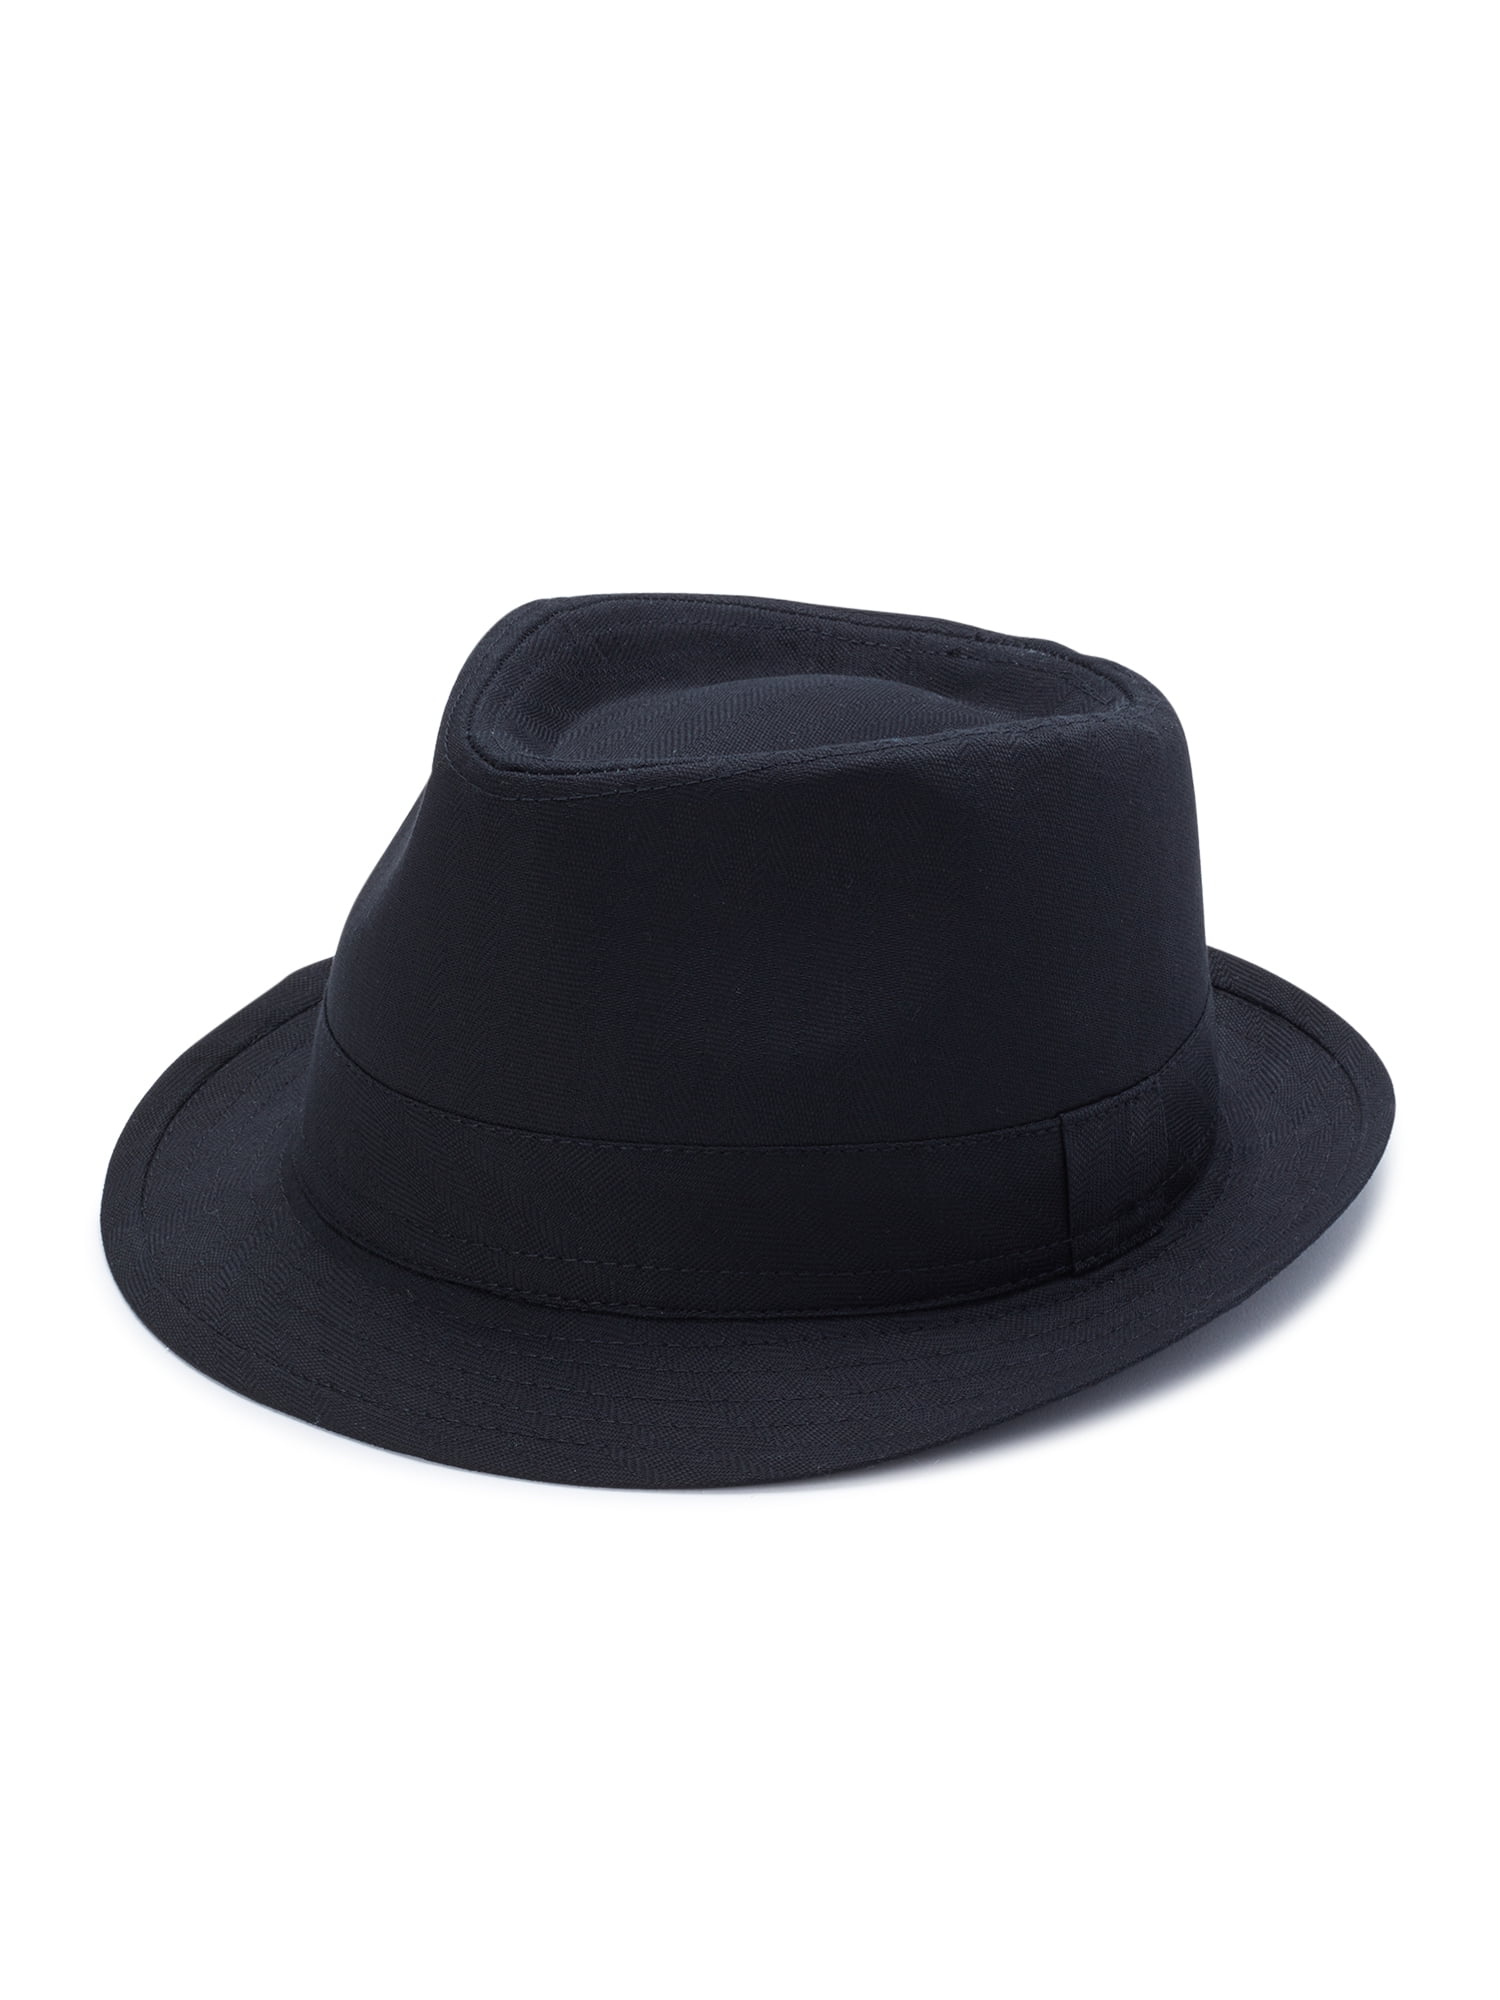 George Men's Herringbone Fedora Hat